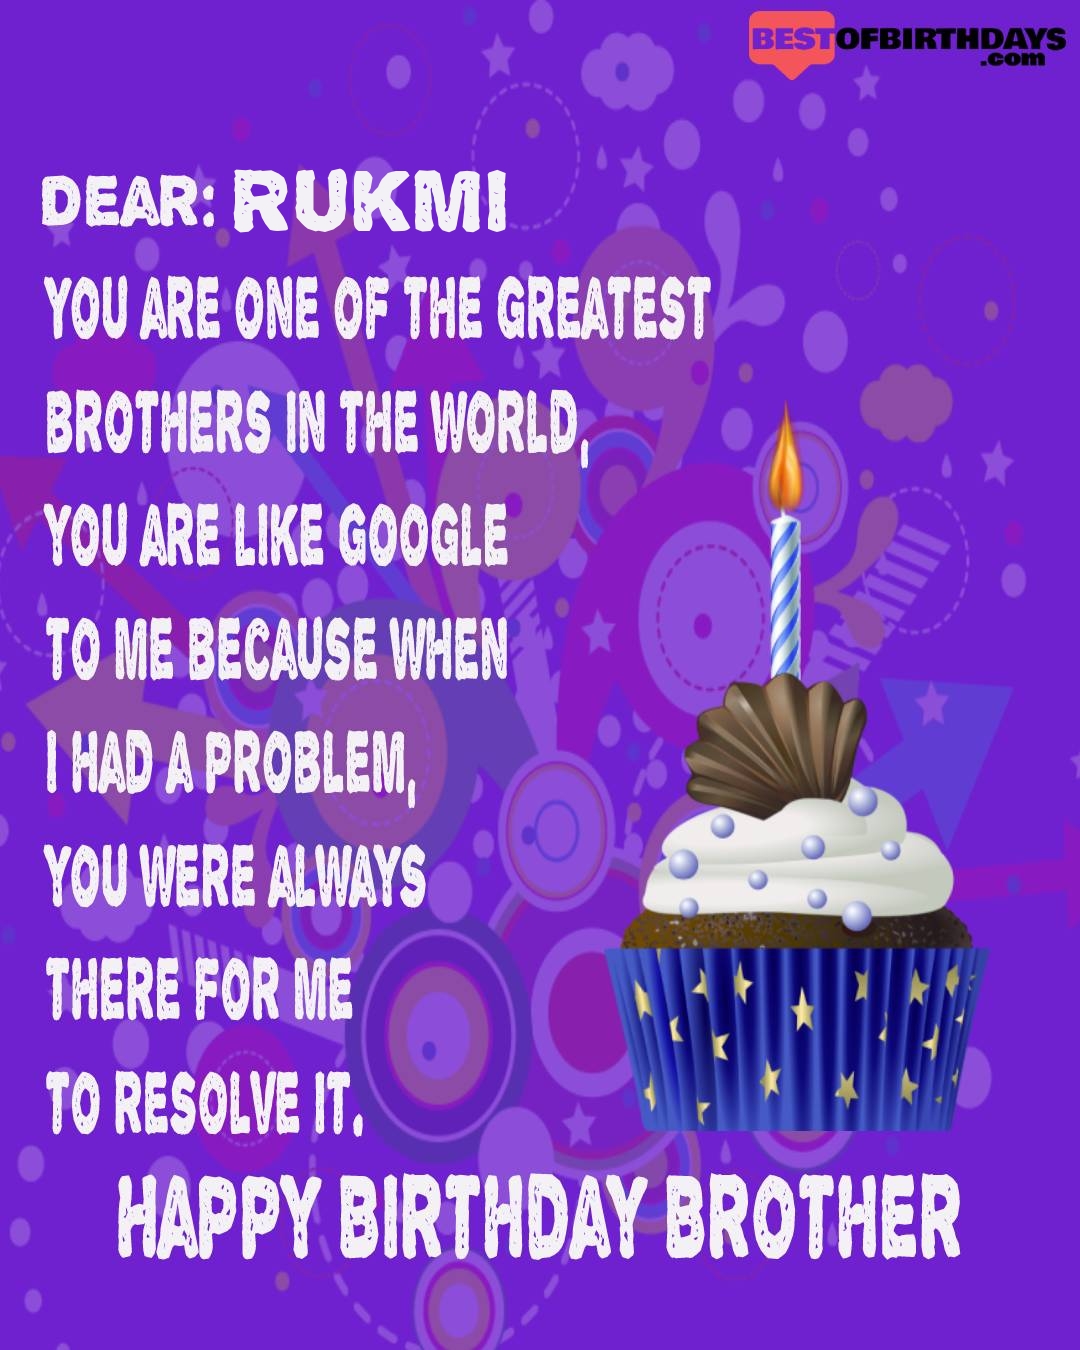 Happy birthday rukmi bhai brother bro